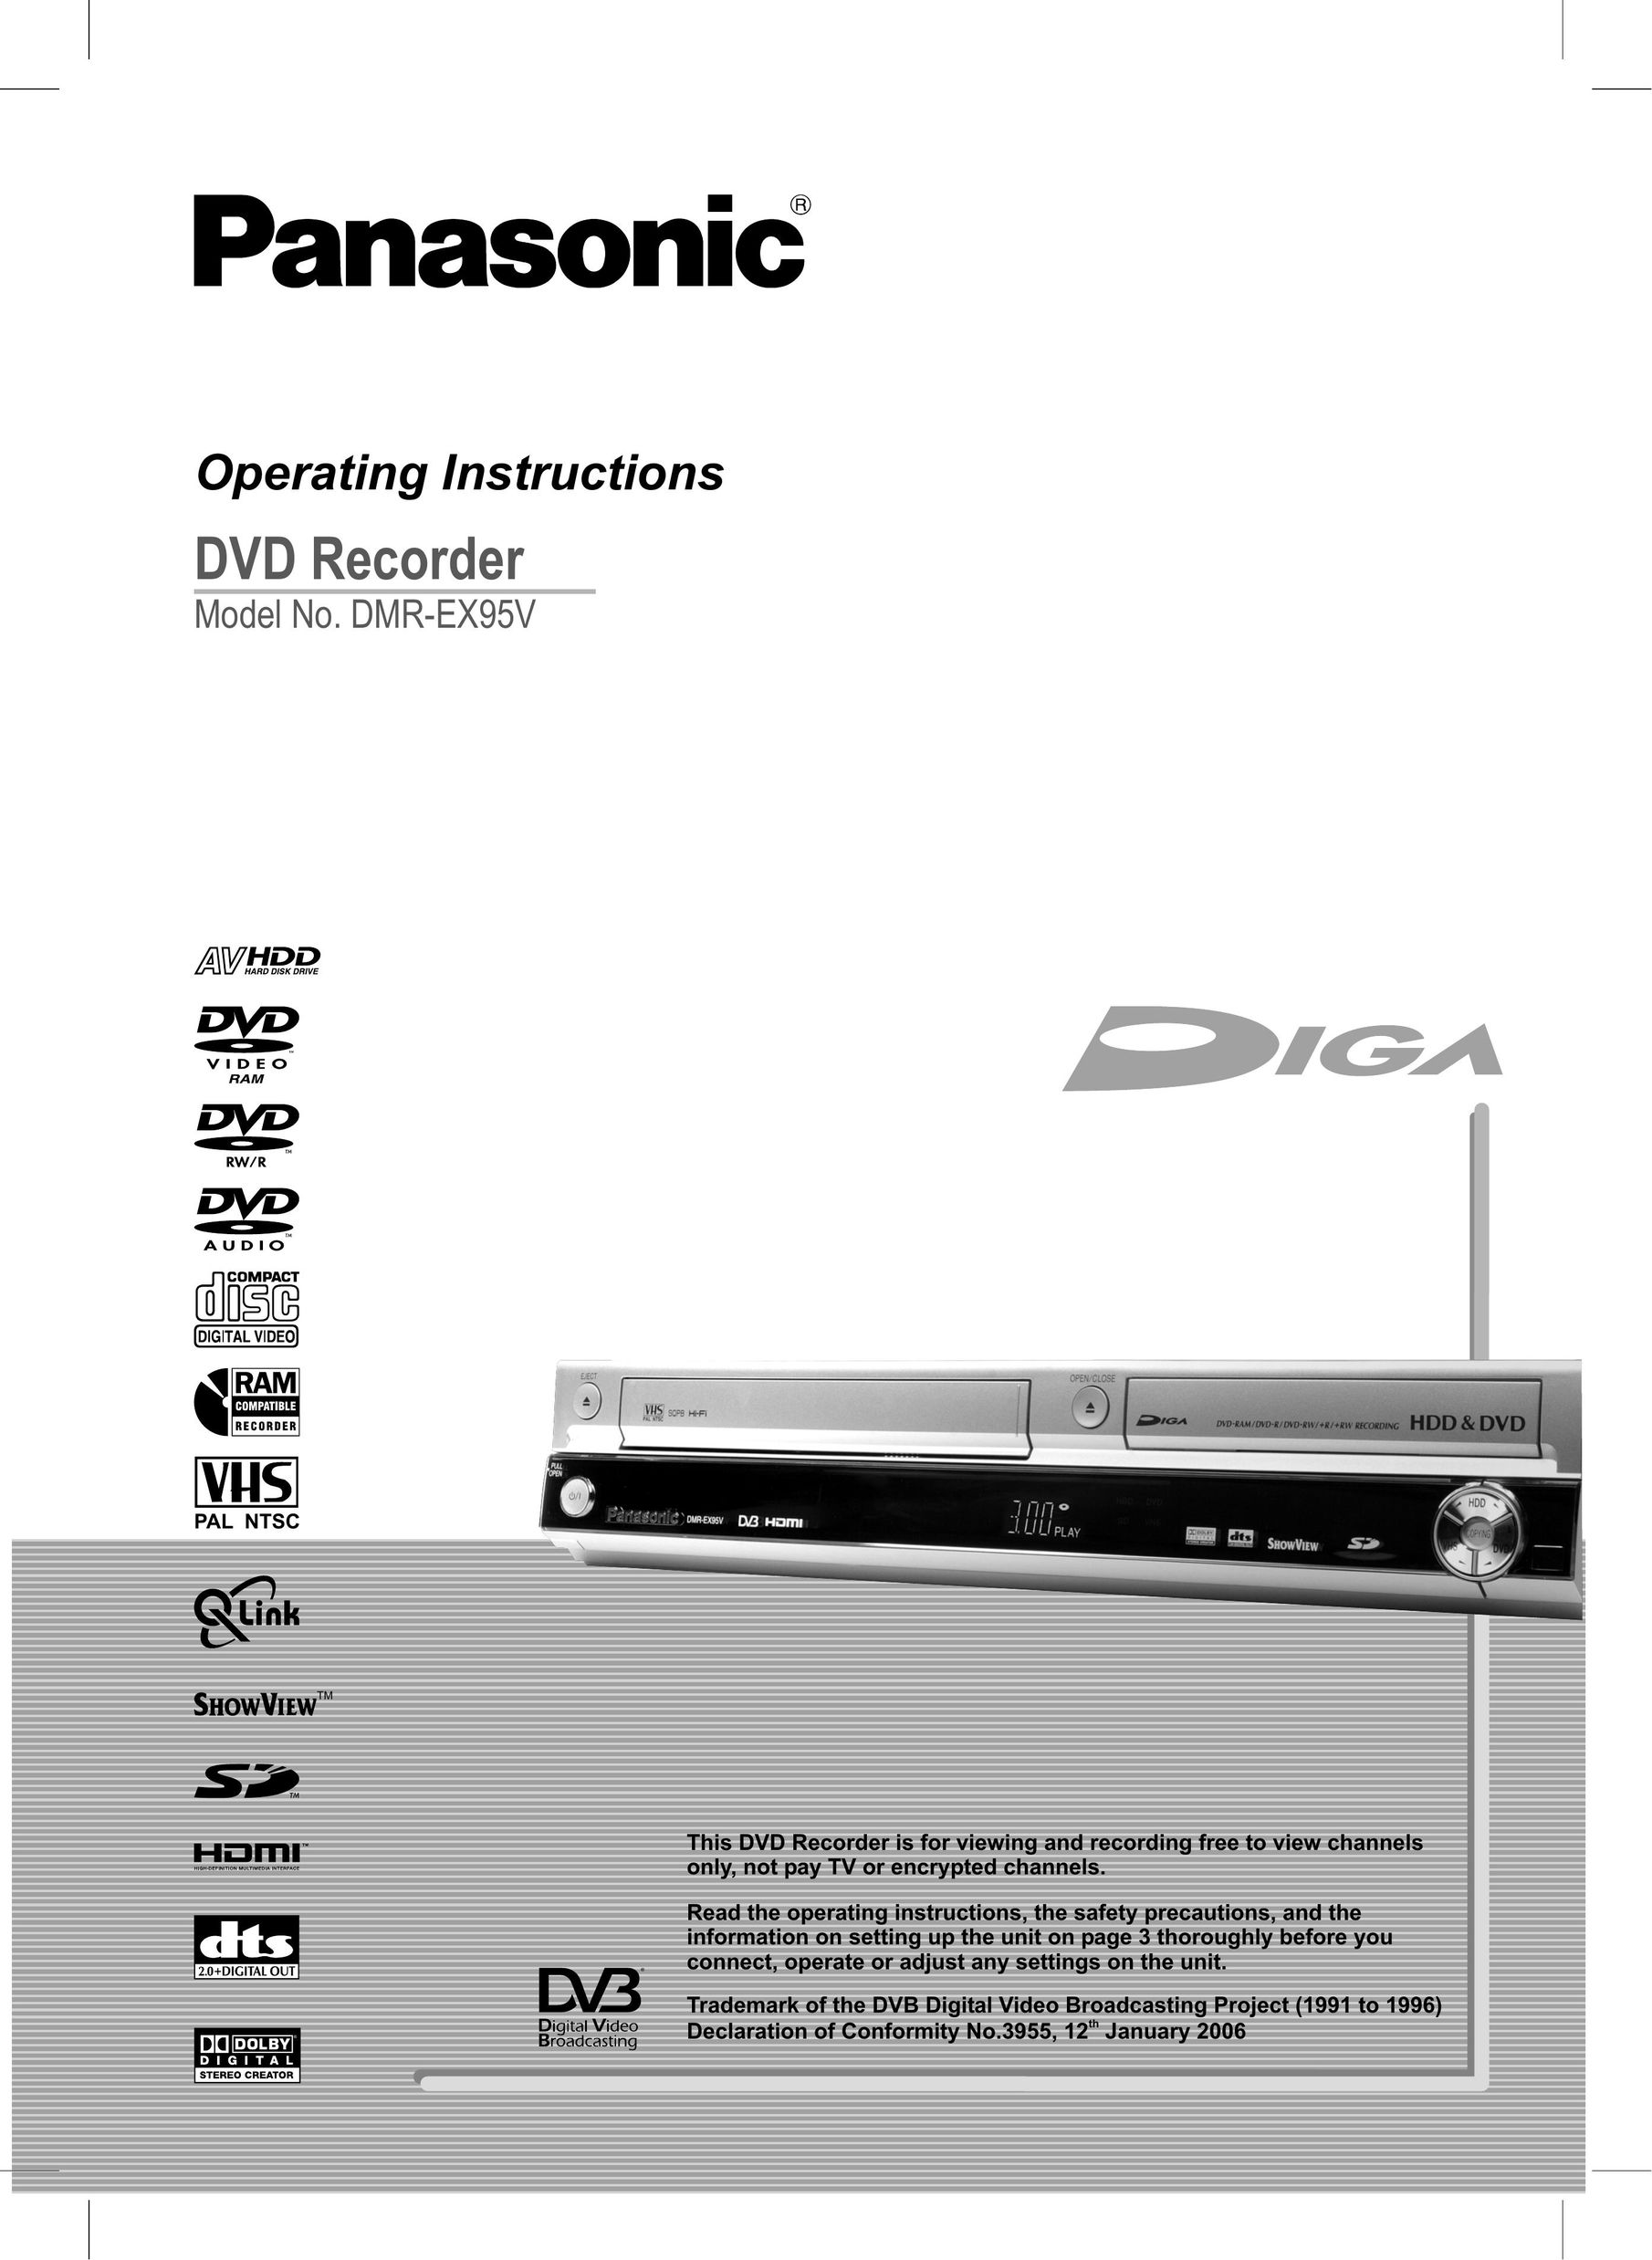 Panasonic DMR-EX95V DVD Recorder User Manual